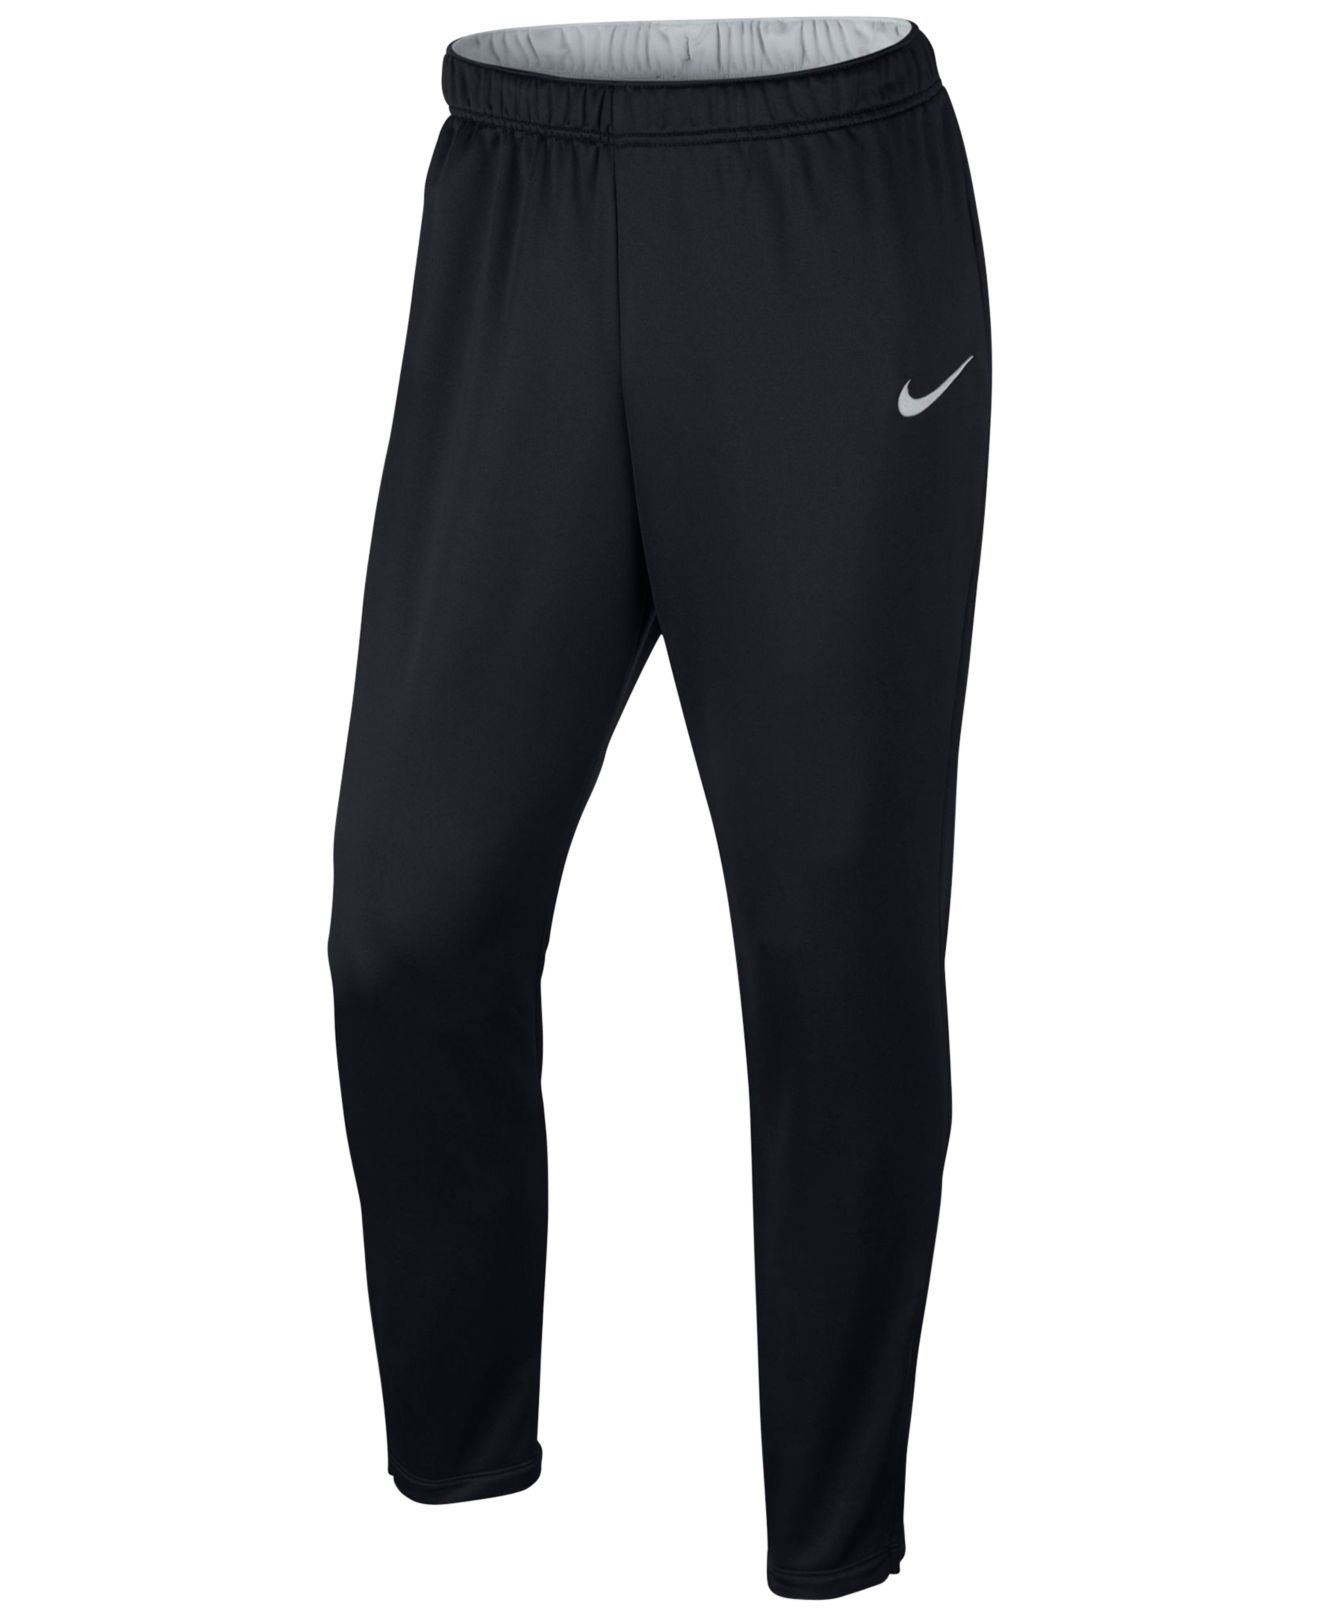 Lyst - Nike Academy Slim-fit Performance Pants in Black for Men